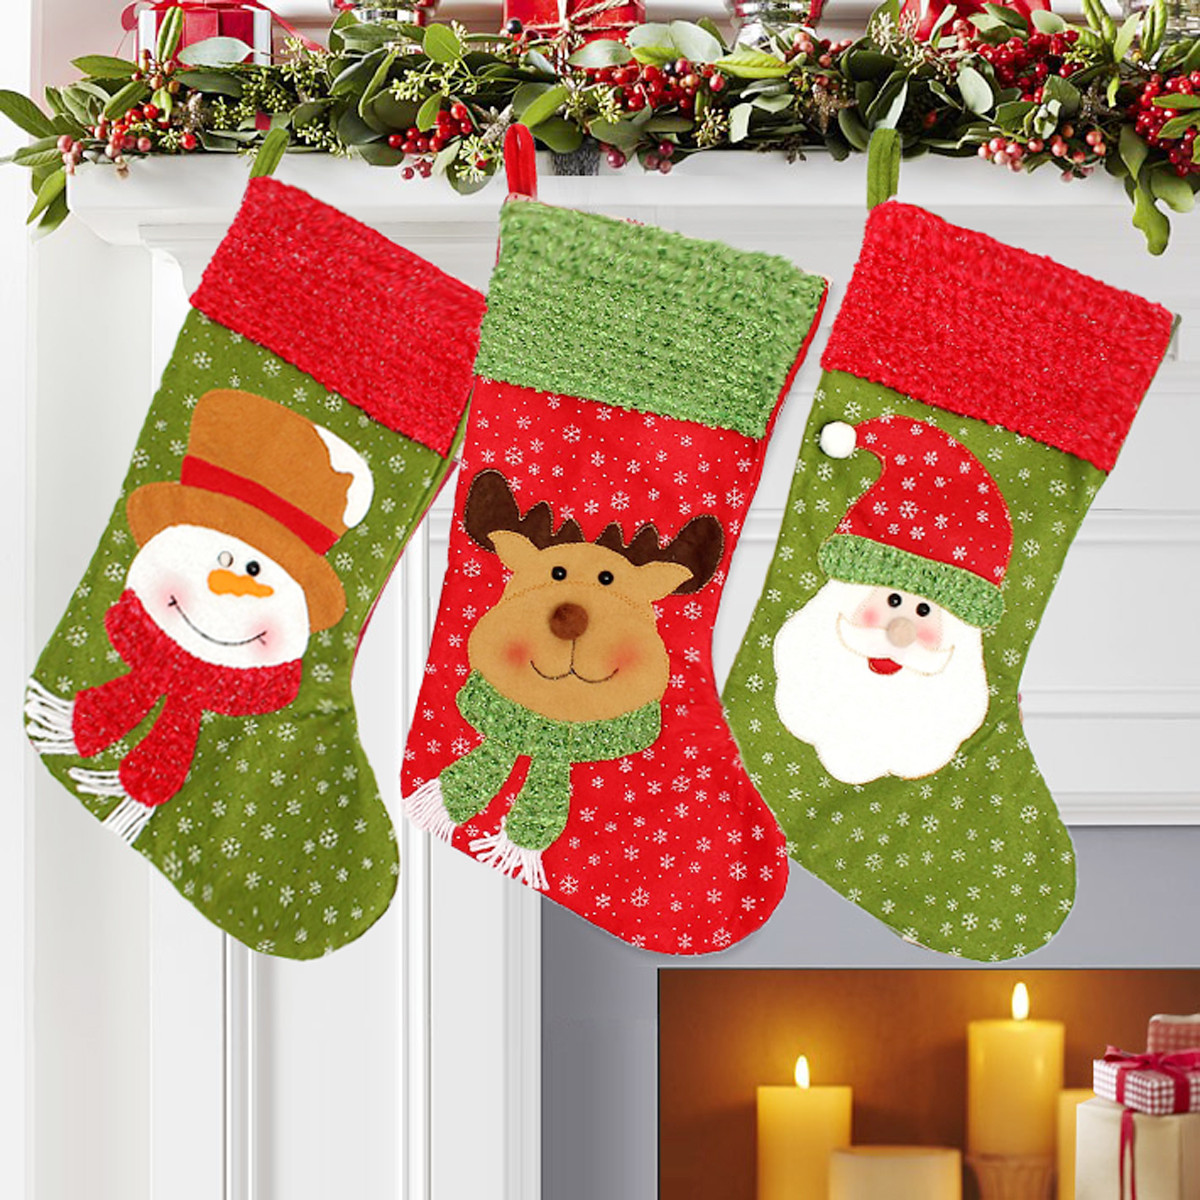 Christmas-Santa-Clau-Snowman-Elk-Stockings-Hanging-Gift-Bag-Christmas-Party-Deocration-1009926-2